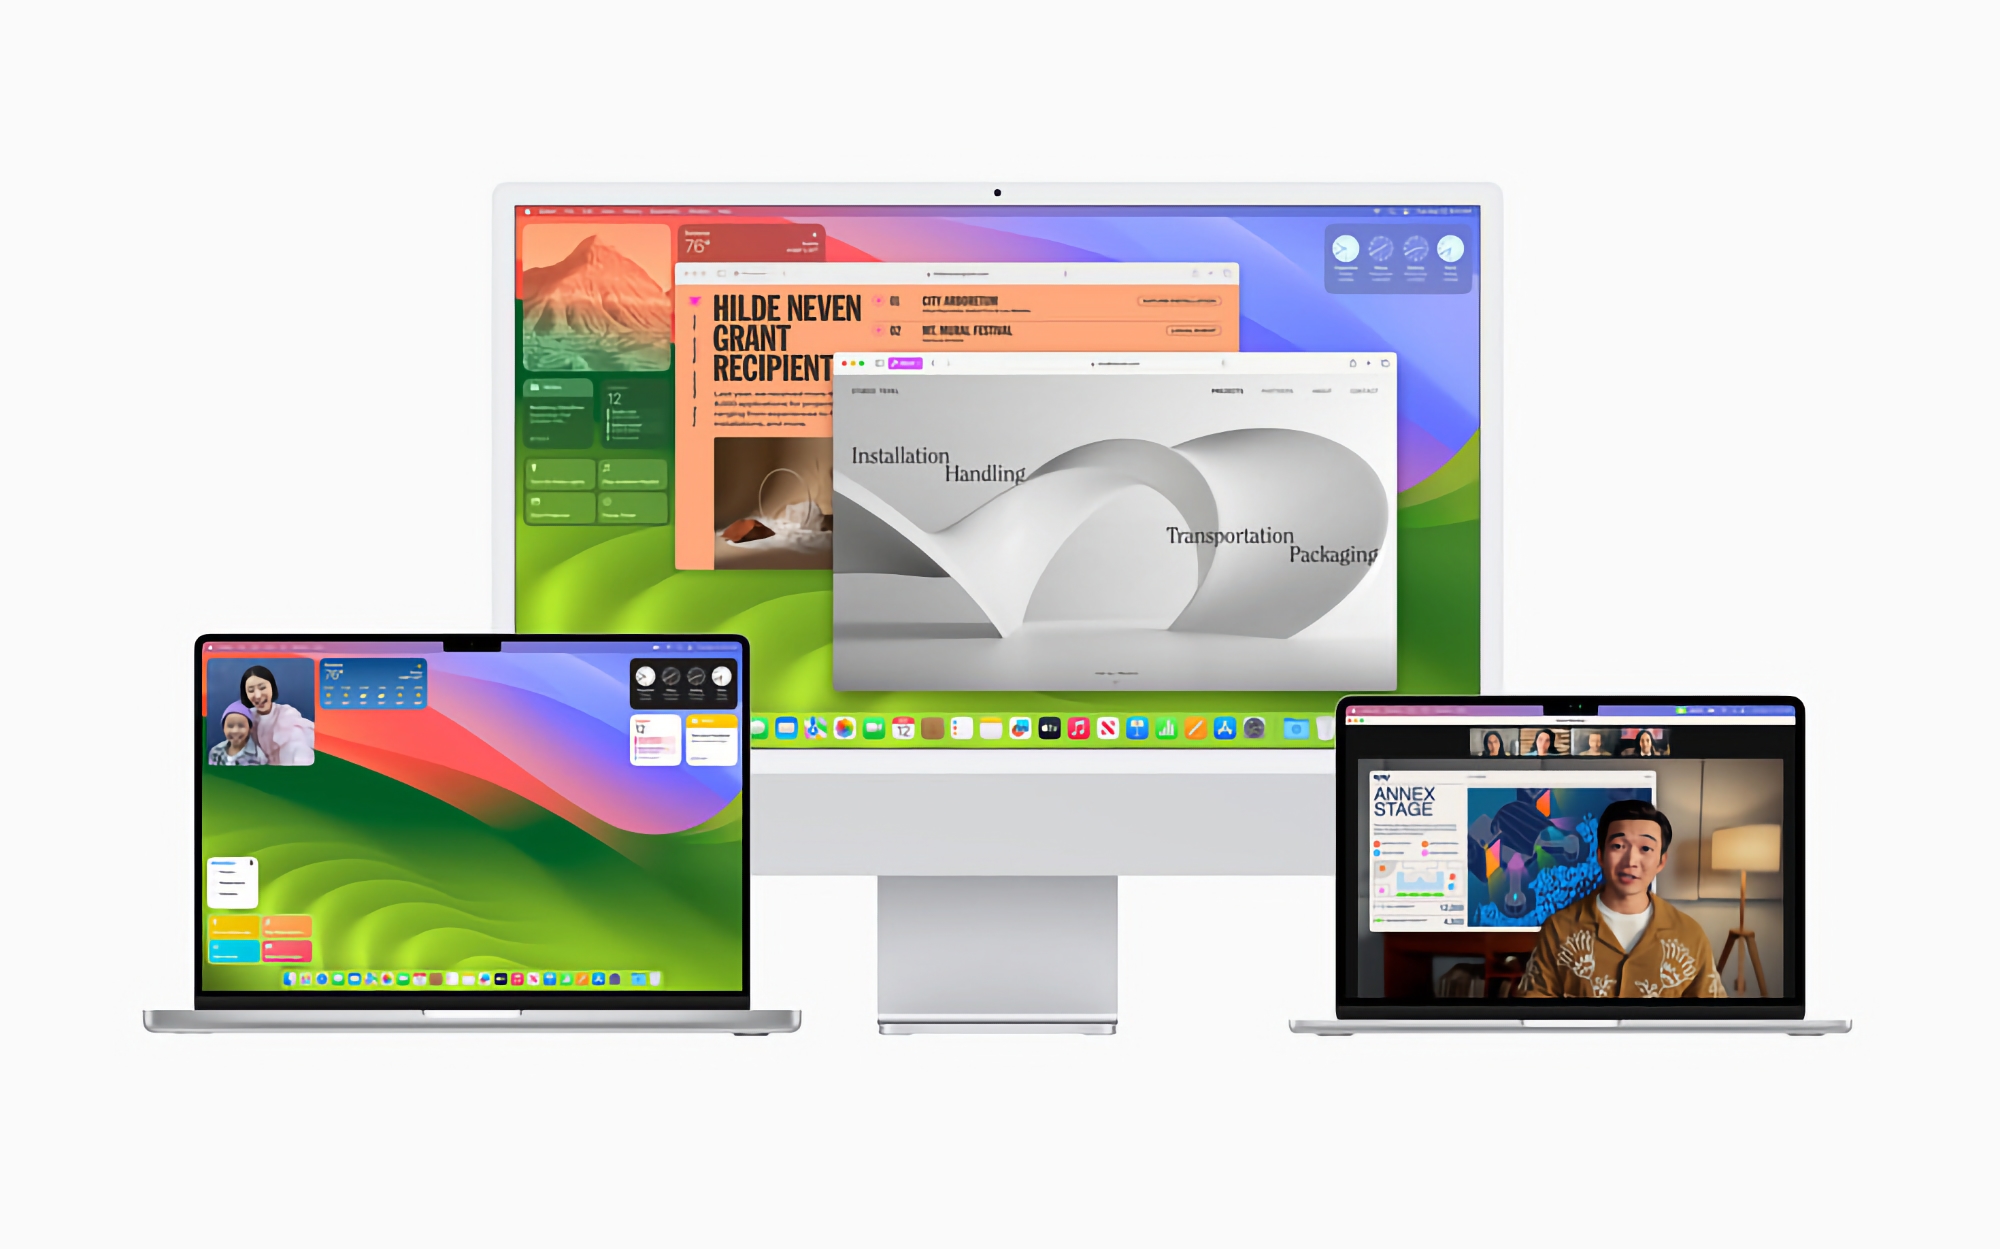 Not just iOS 17.1.2: Apple announced macOS Sonoma 14.1.2